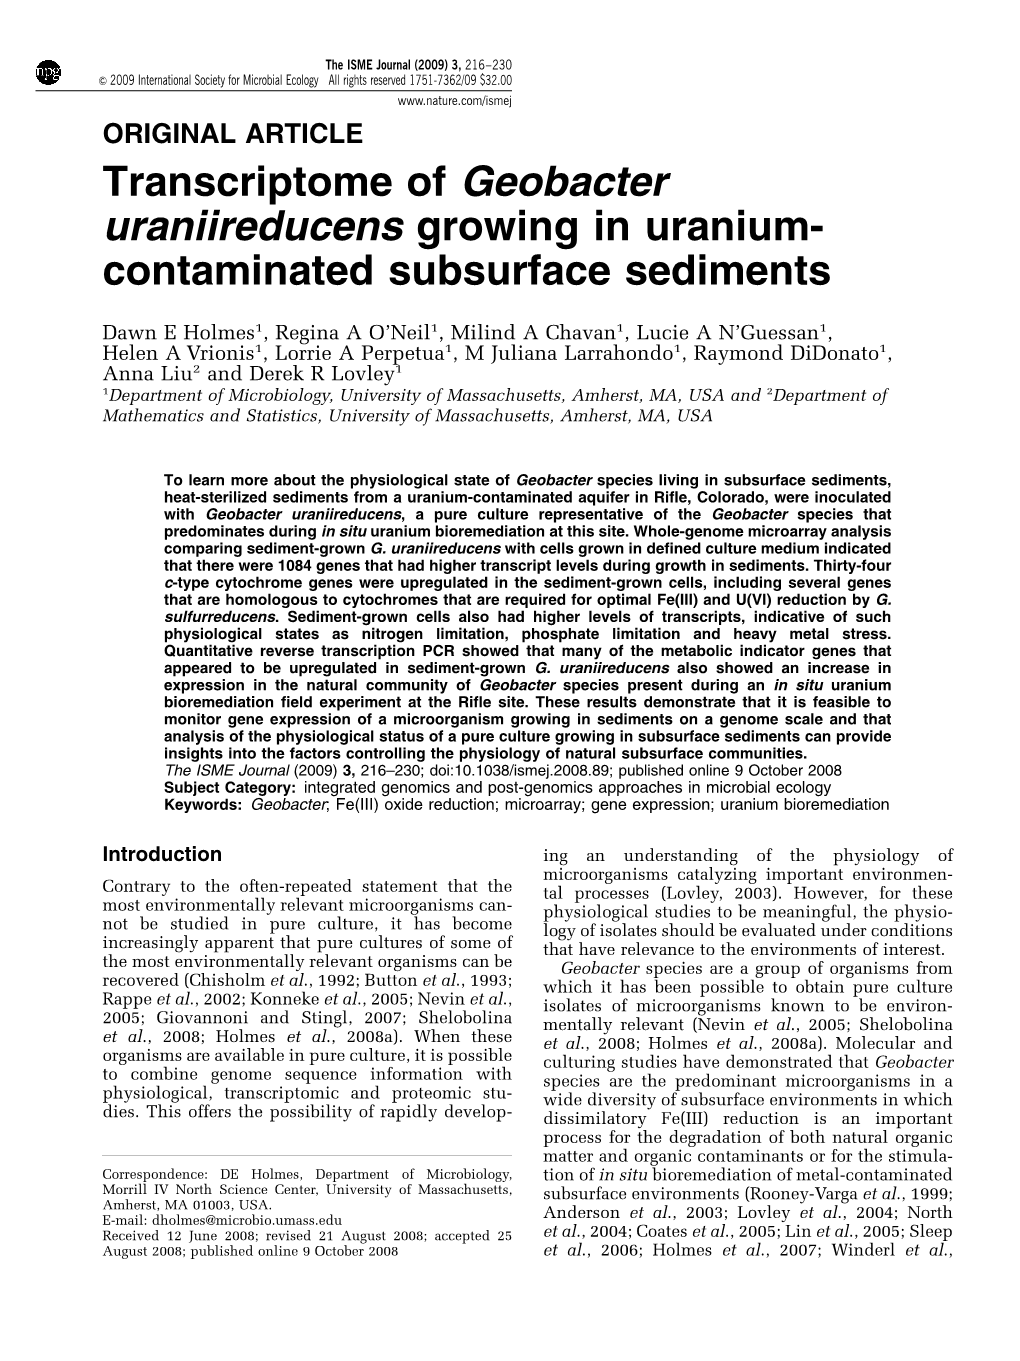 Transcriptome of Geobacter Uraniireducens Growing in Uranium- Contaminated Subsurface Sediments